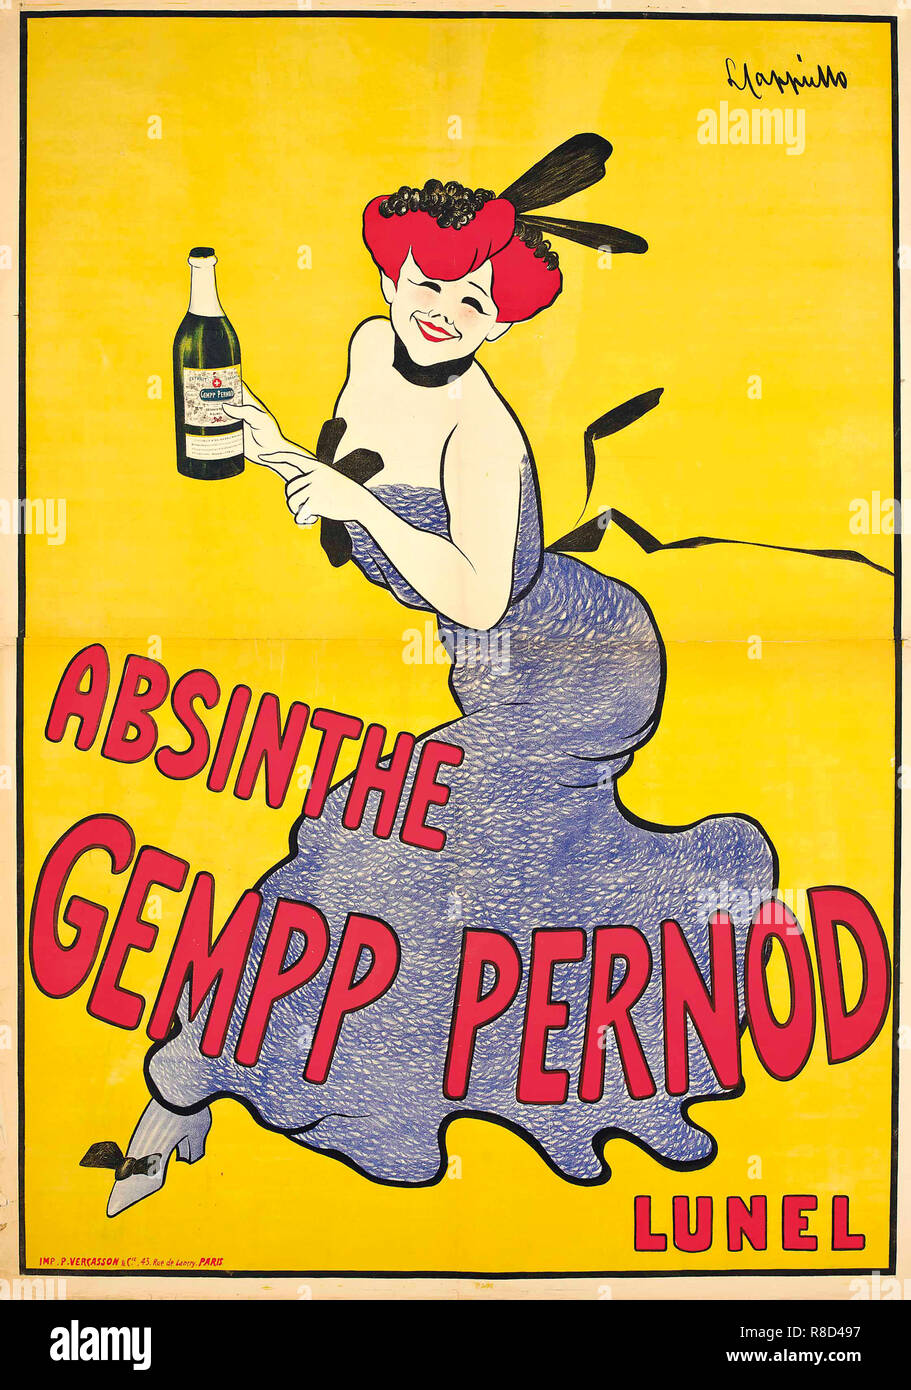 Absinthe Gempp Pernod, c1910. Stock Photo